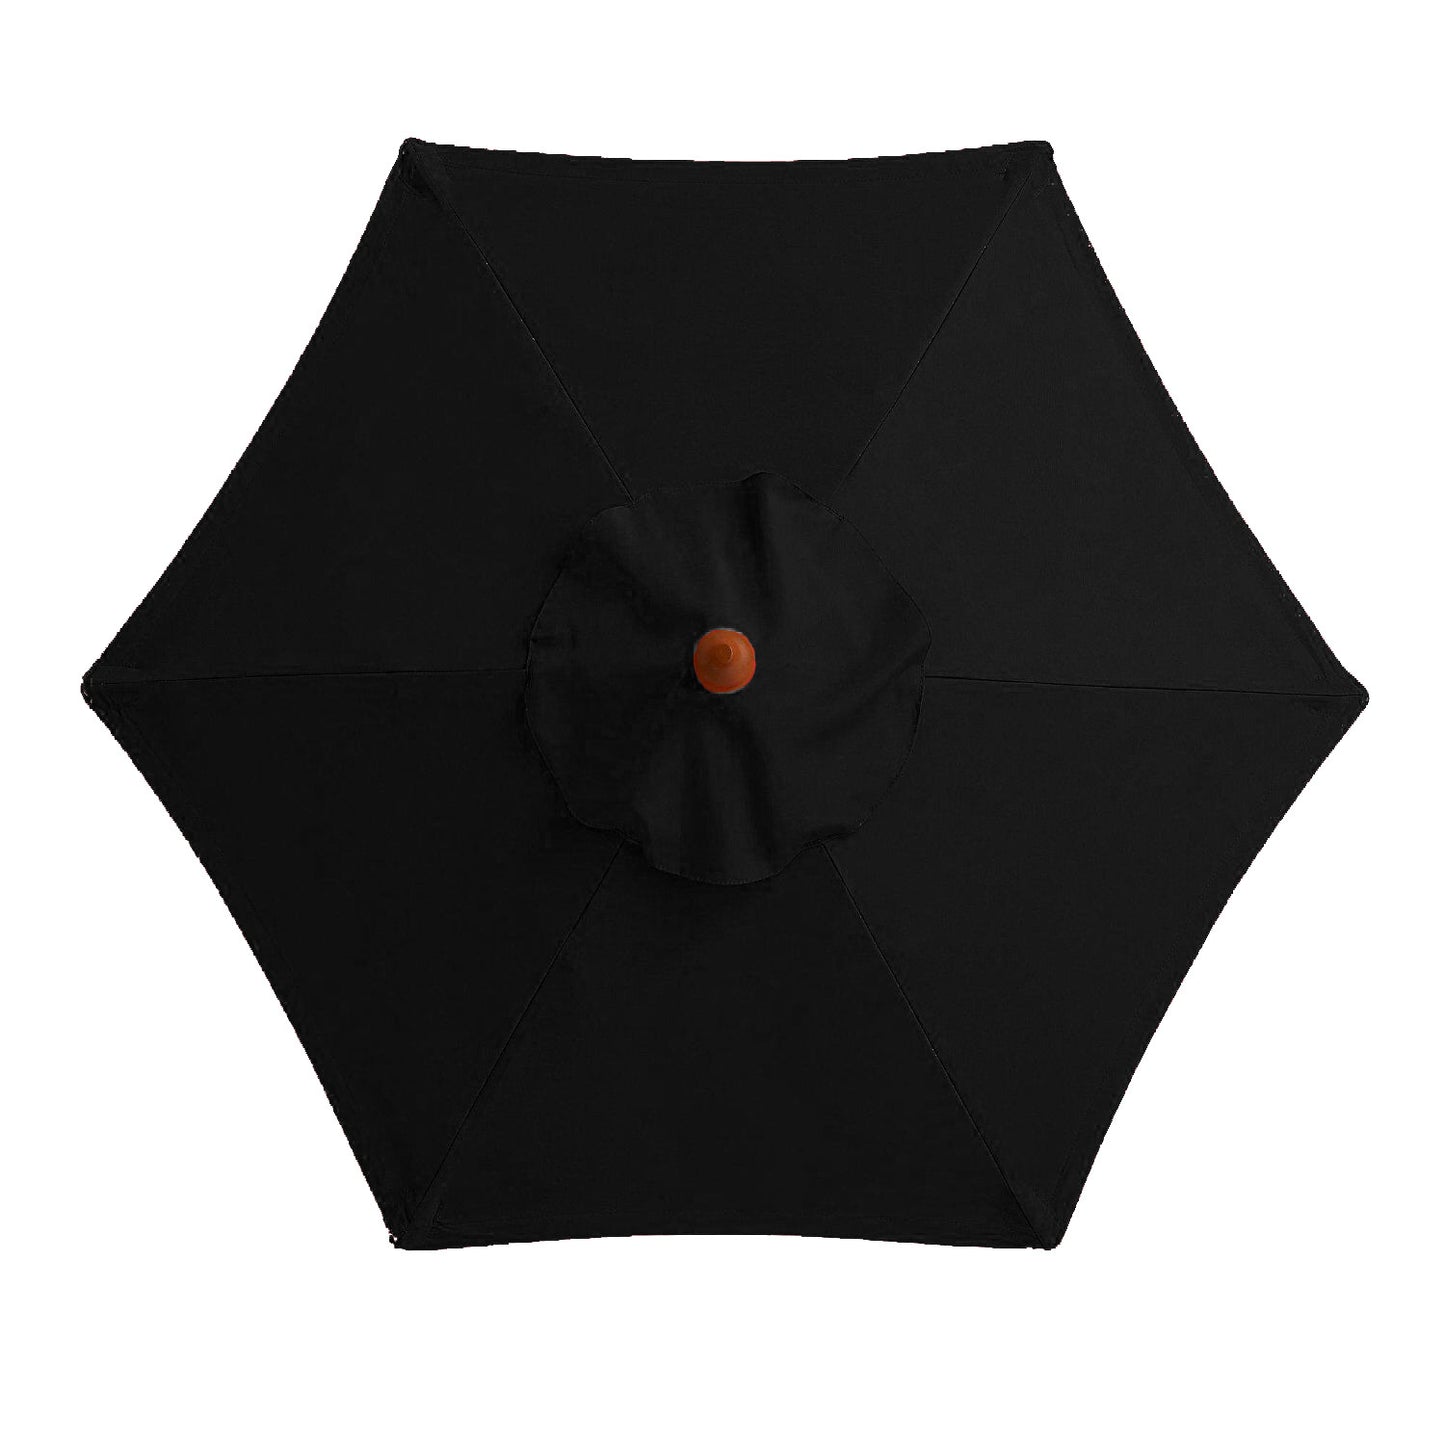 Outdoor Rainproof Sun Umbrella